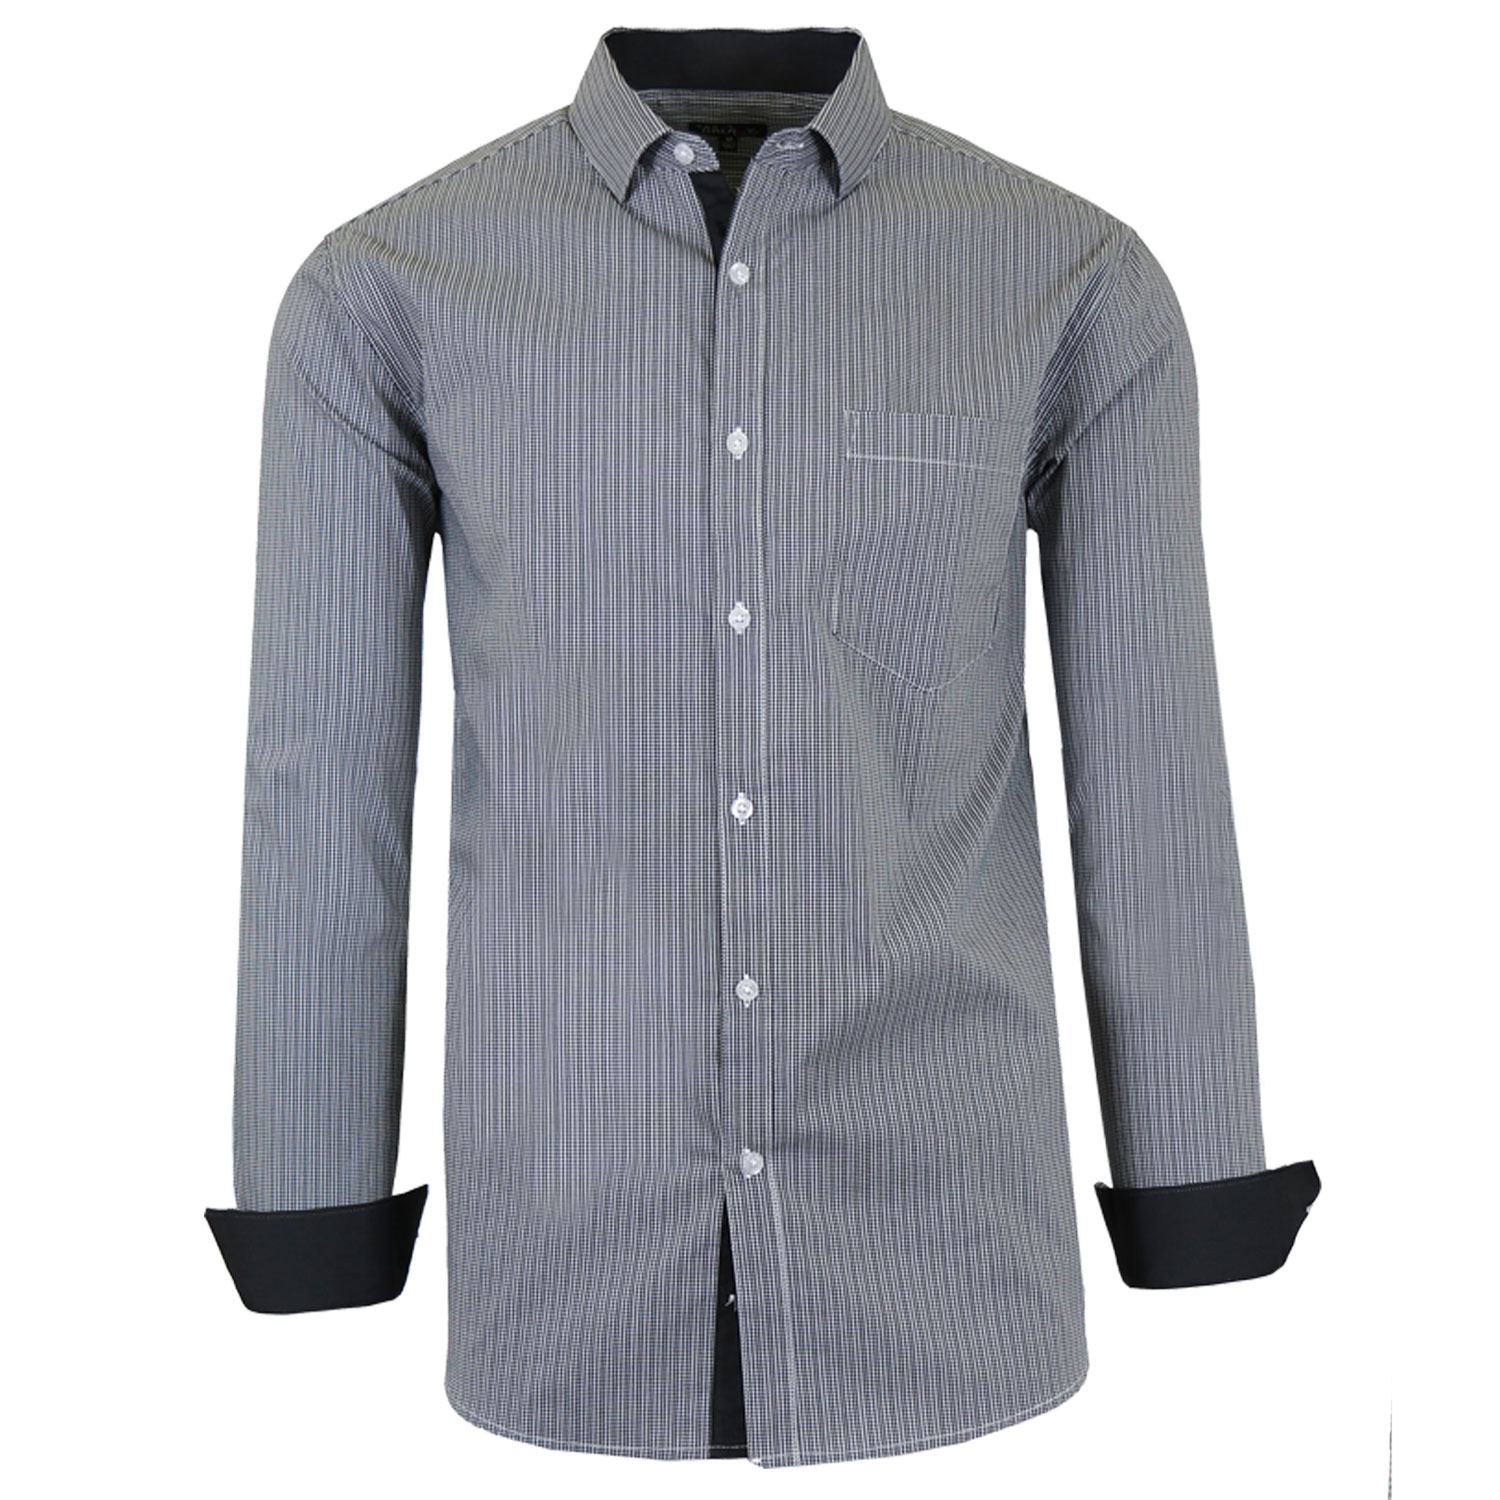 Men's Long Sleeve Printed Stretch Dress Shirts